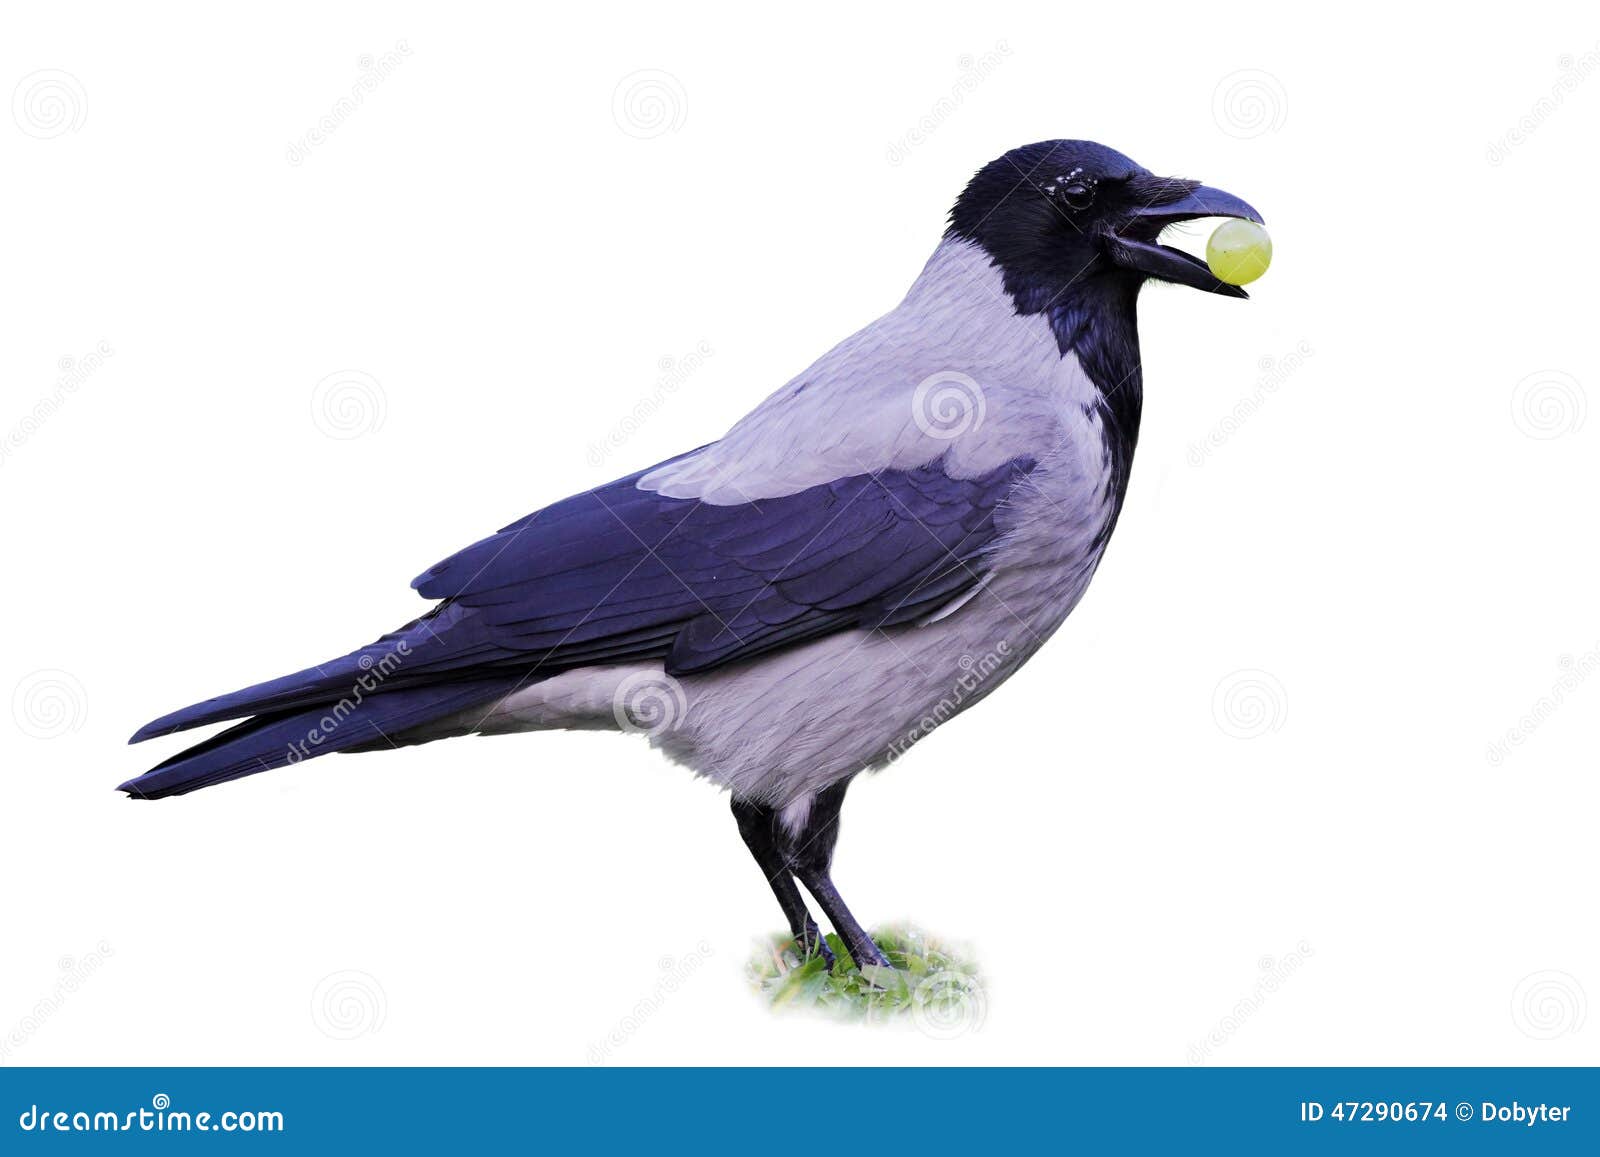 hooded crow (corvus cornix) holding grape.